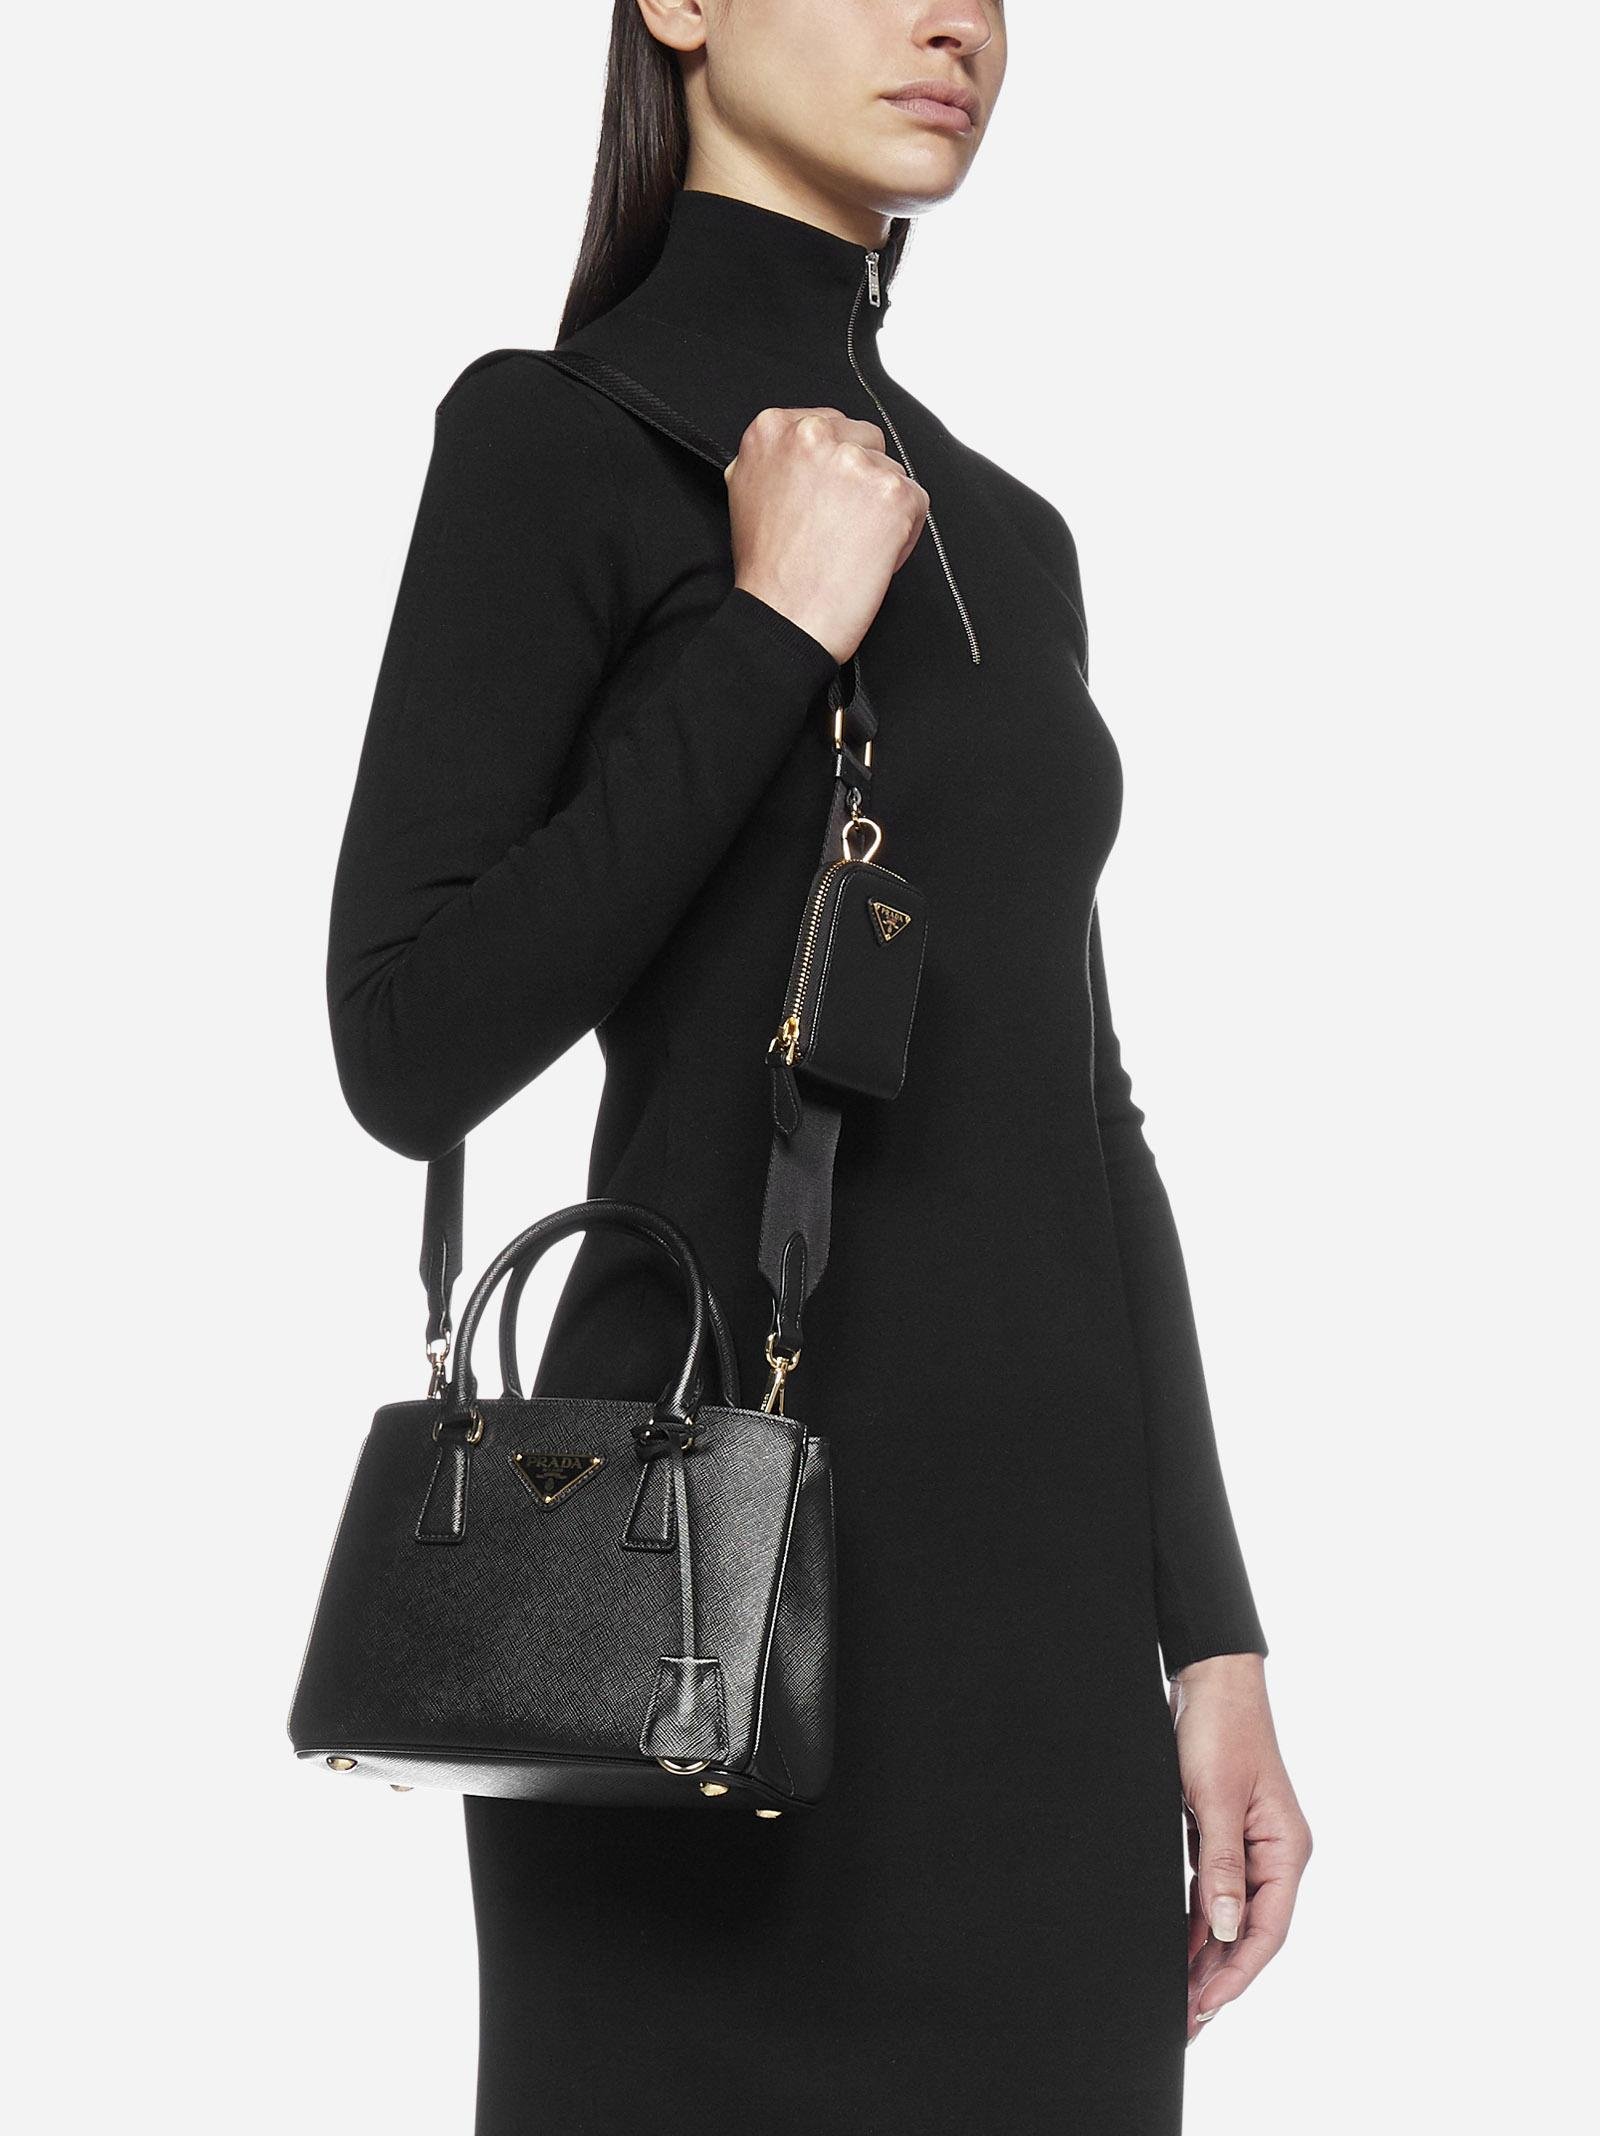 Prada Galleria Saffiano Leather Mini-bag in Black